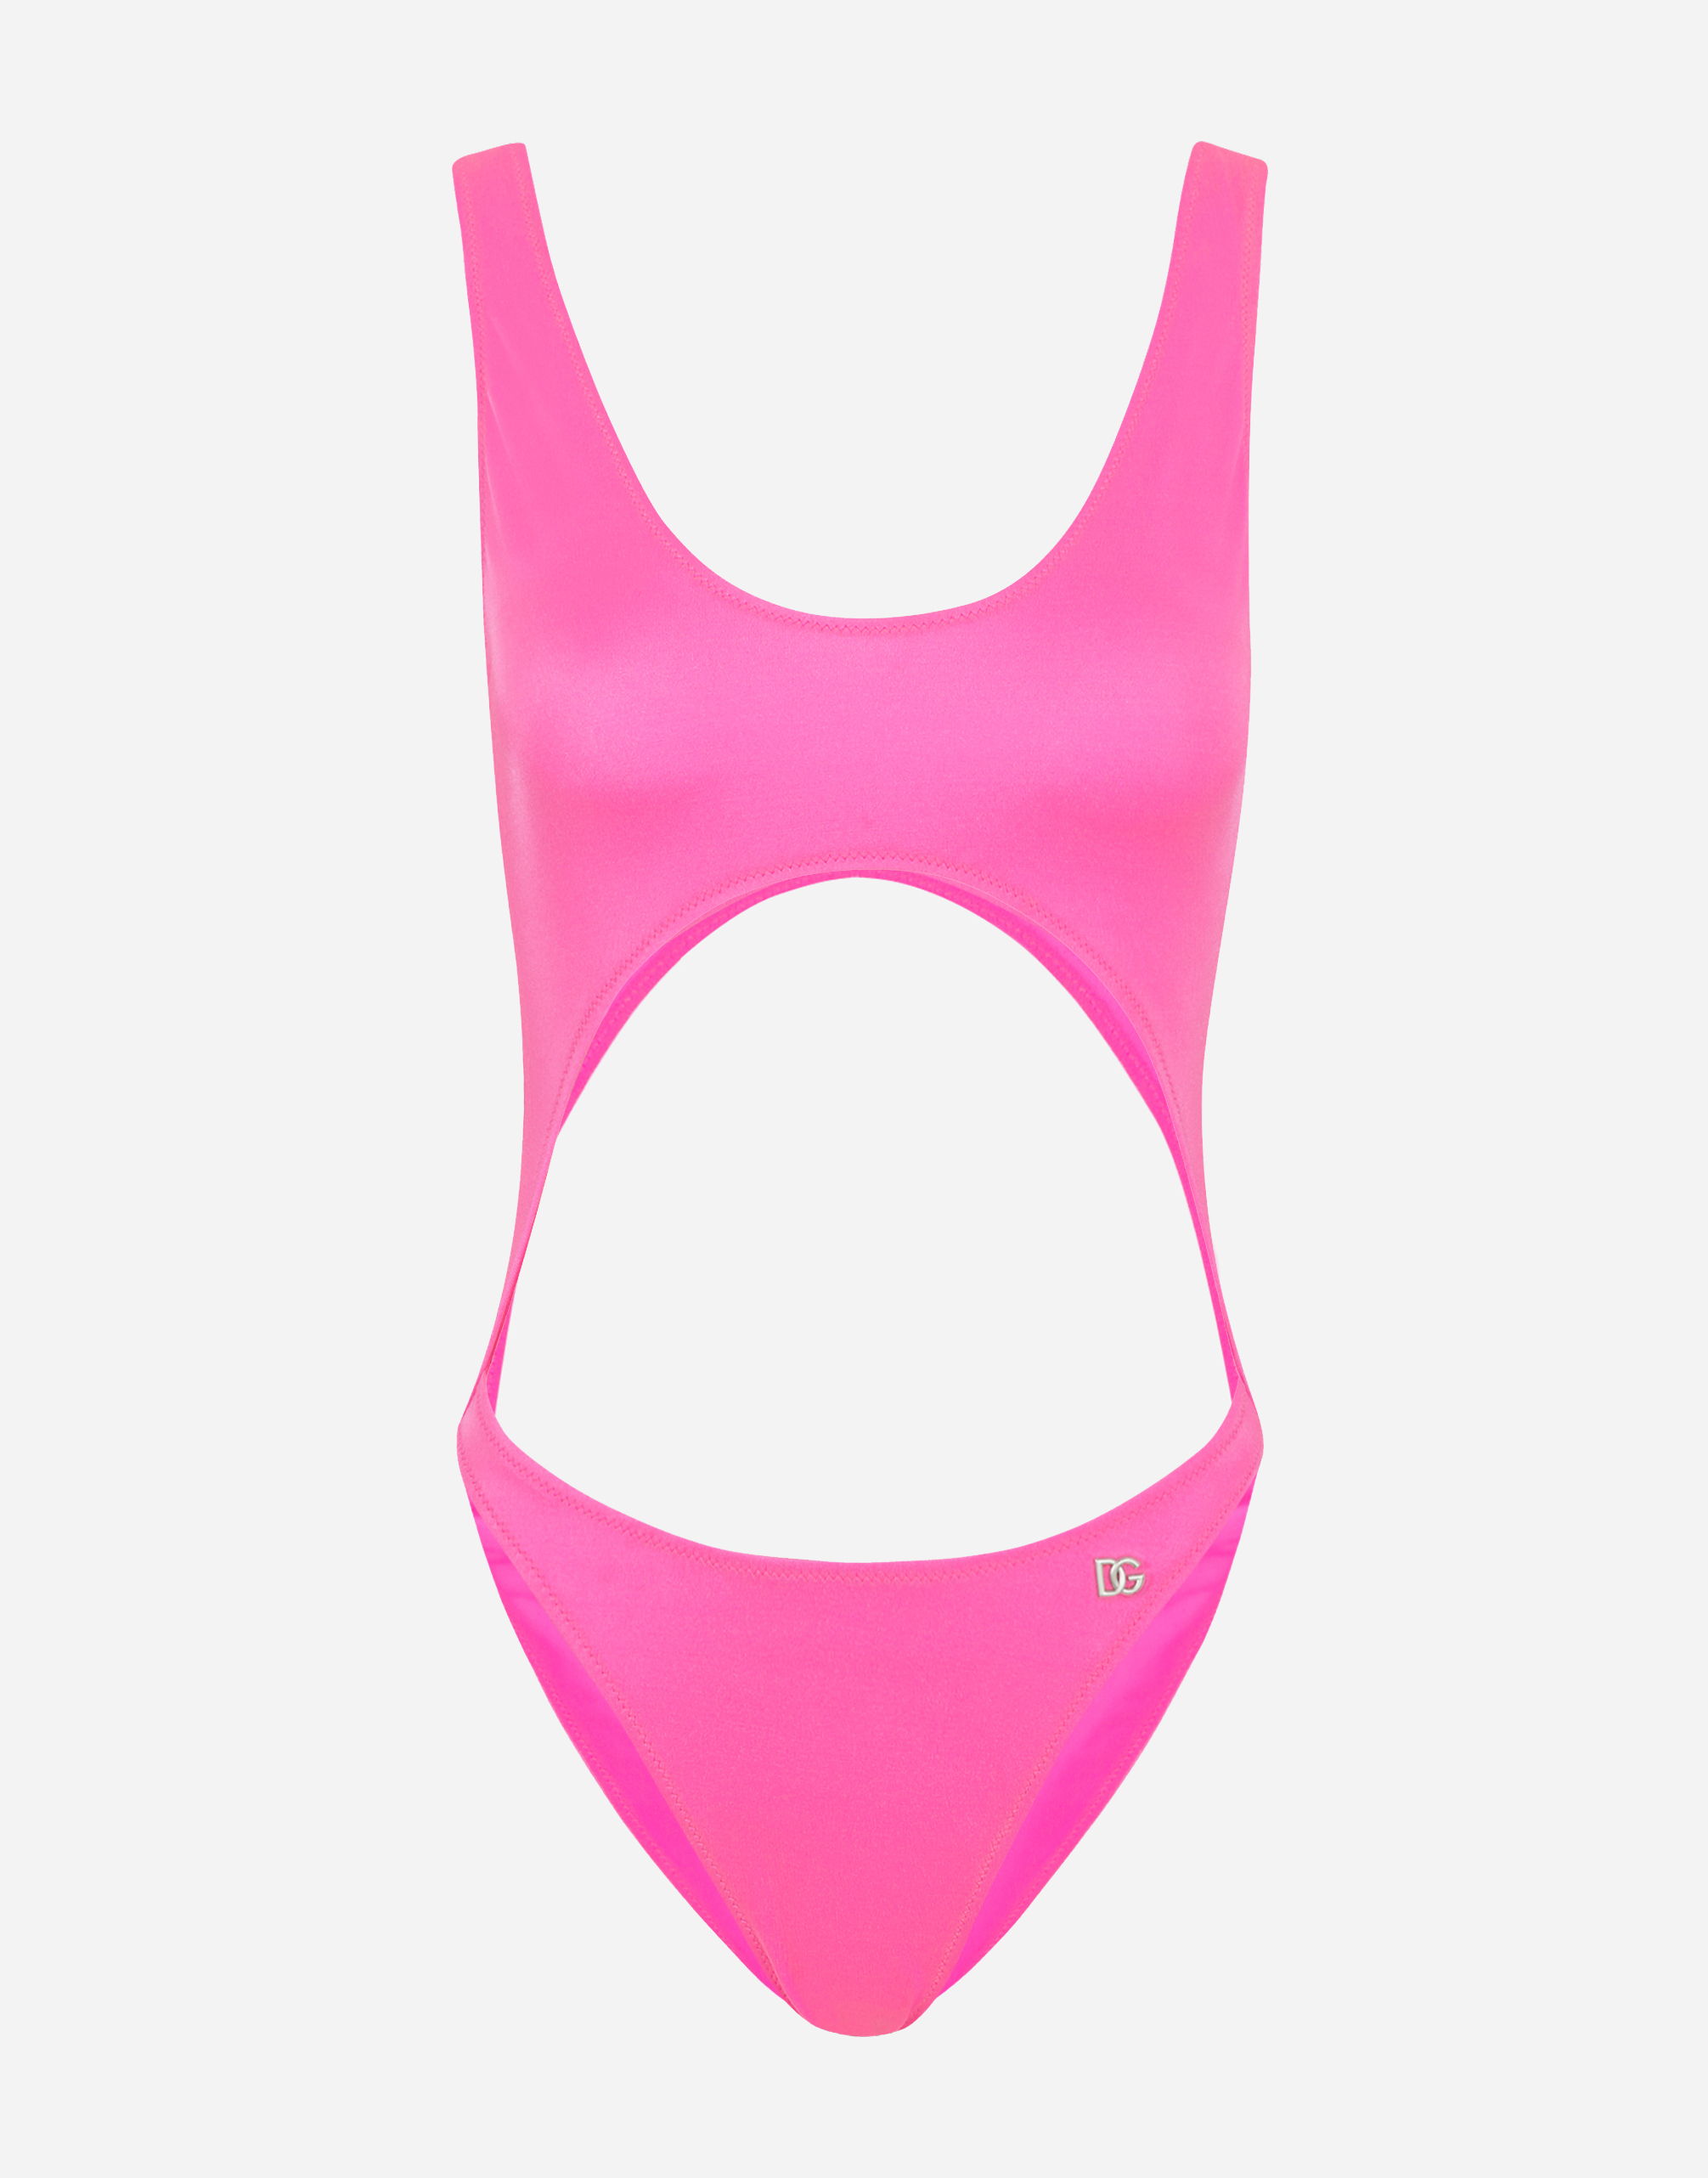 Hublot-style one-piece swimsuit in Fuchsia